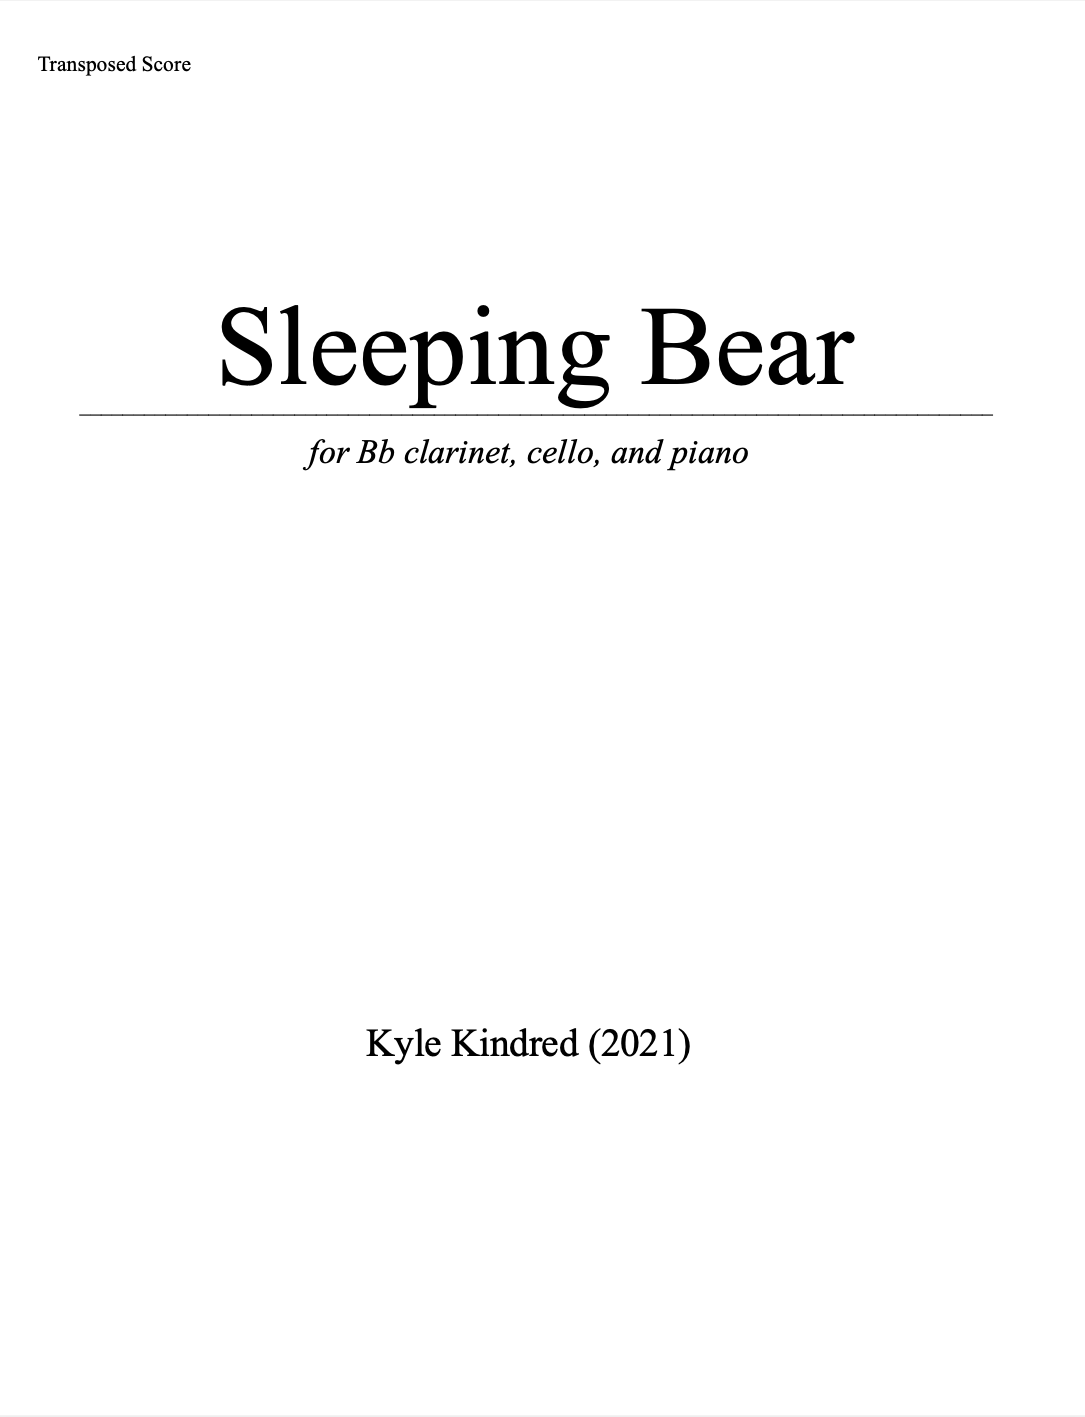 Sleeping Bear by Kyle Kindred